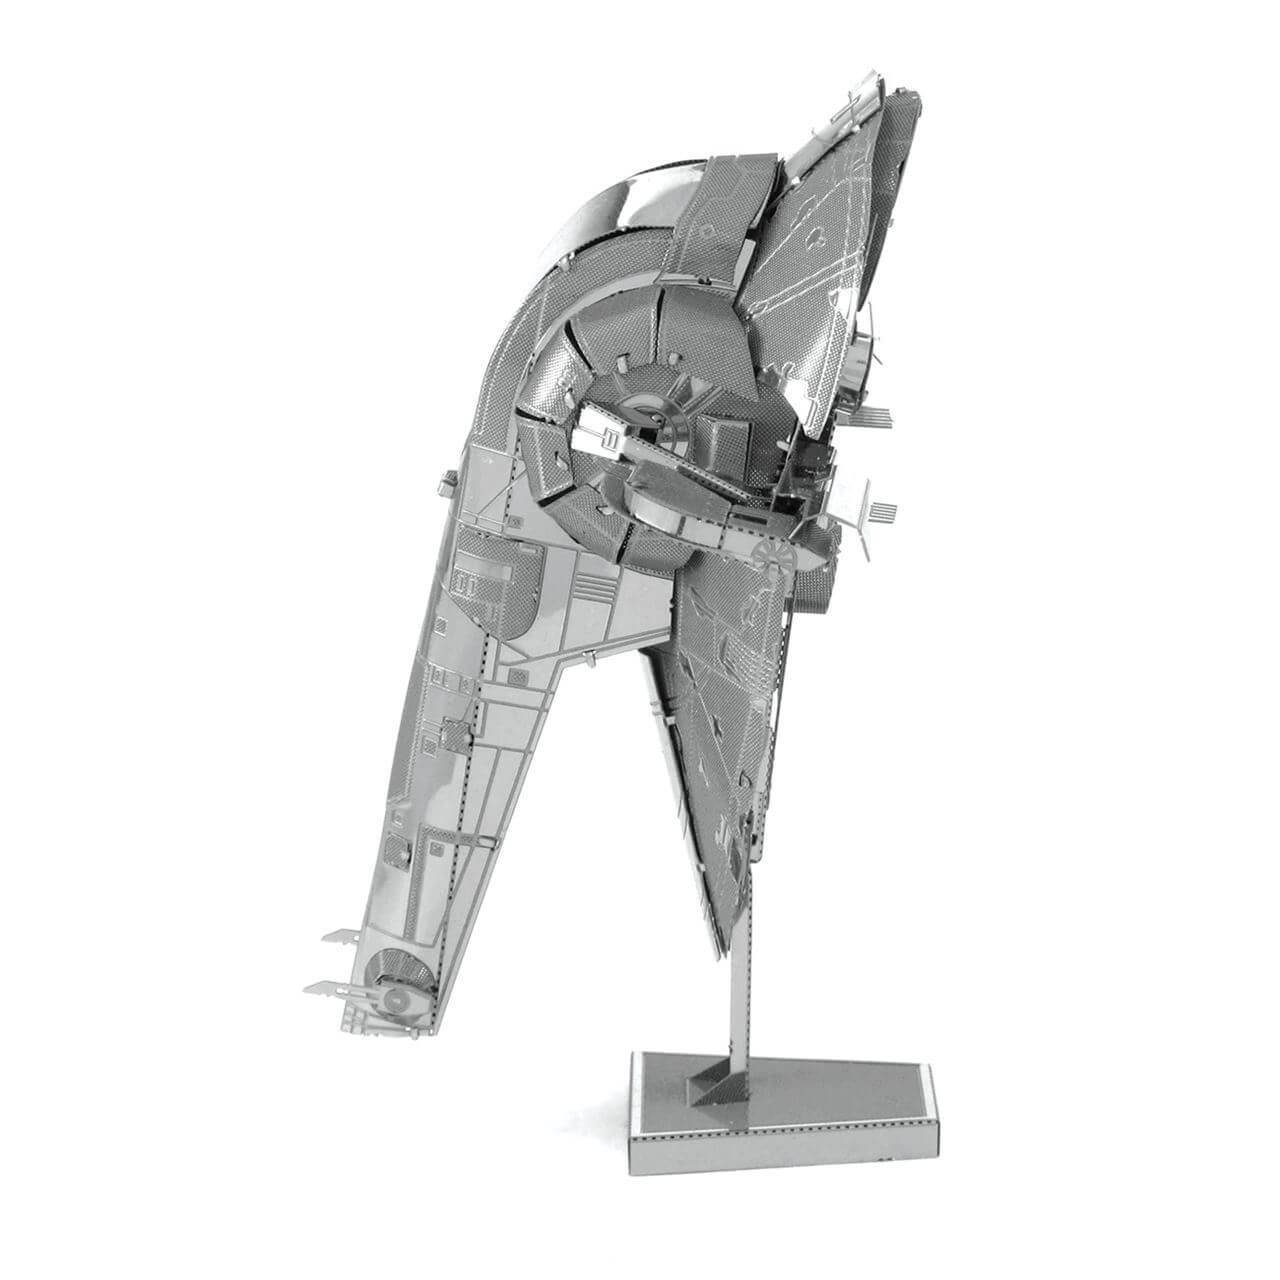 Side view of Metal Earth Star Wars Slave I Metal Model Kit - 2 Sheets.